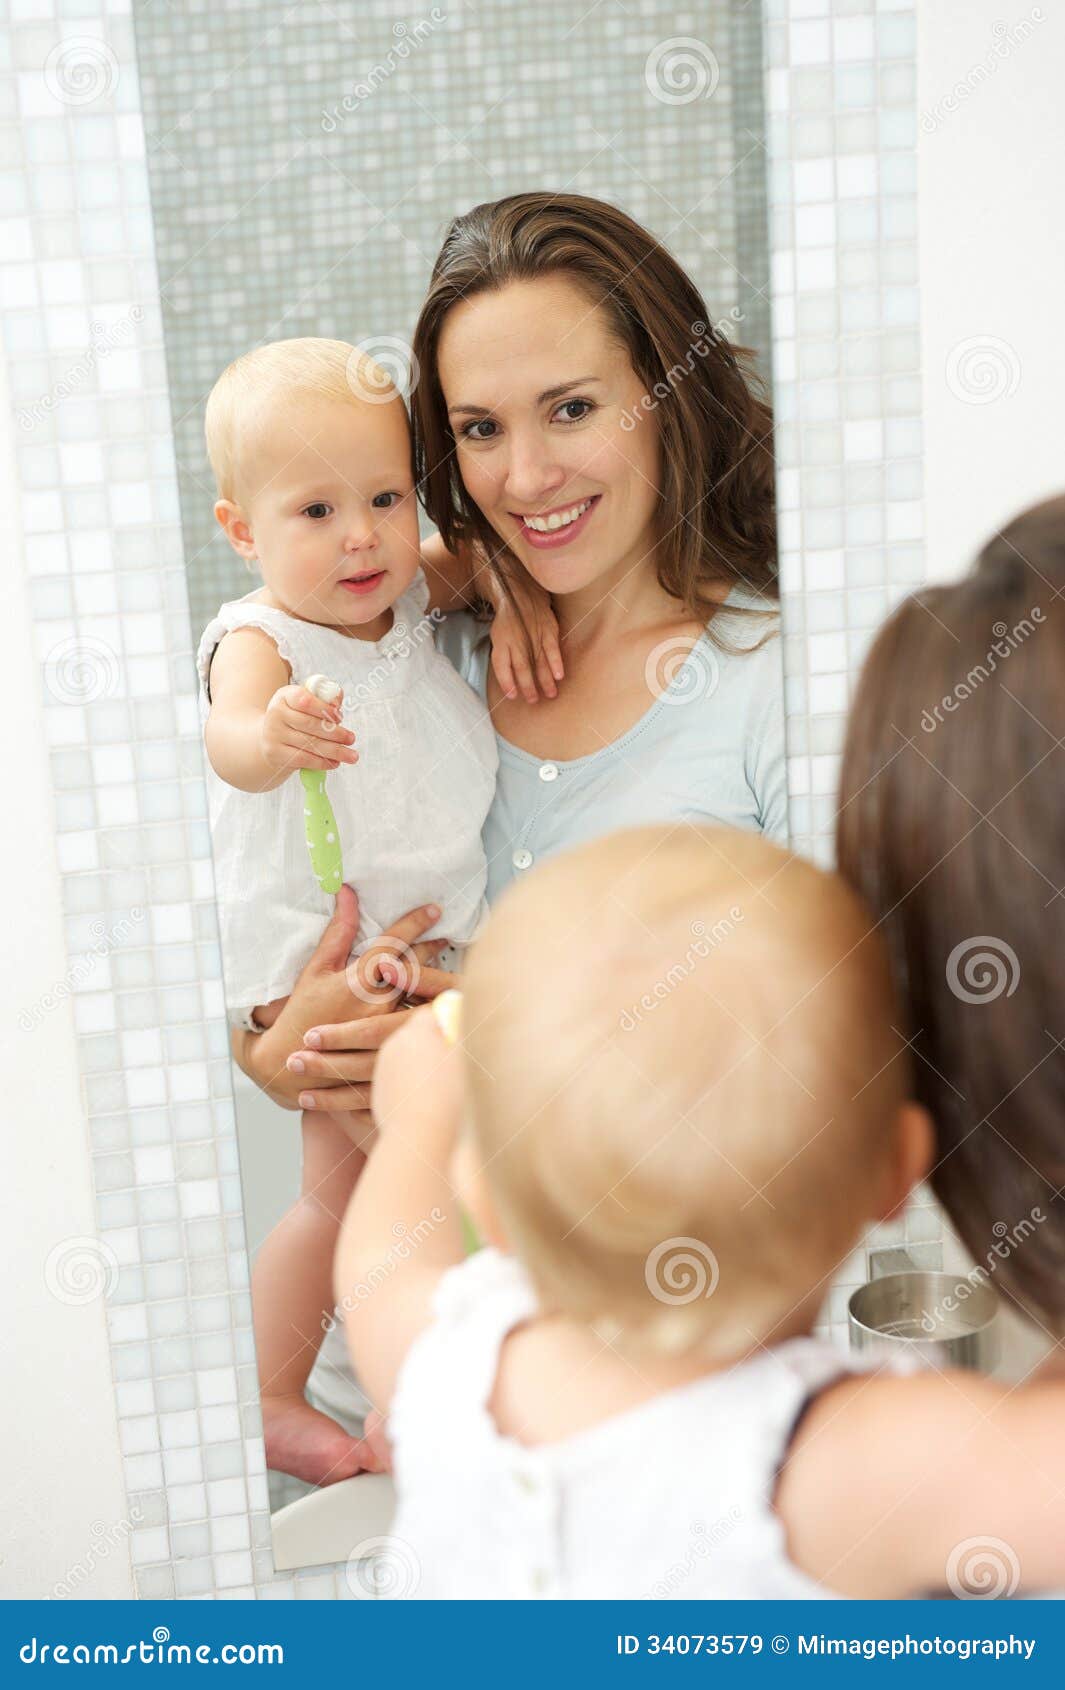 bébé et miroir